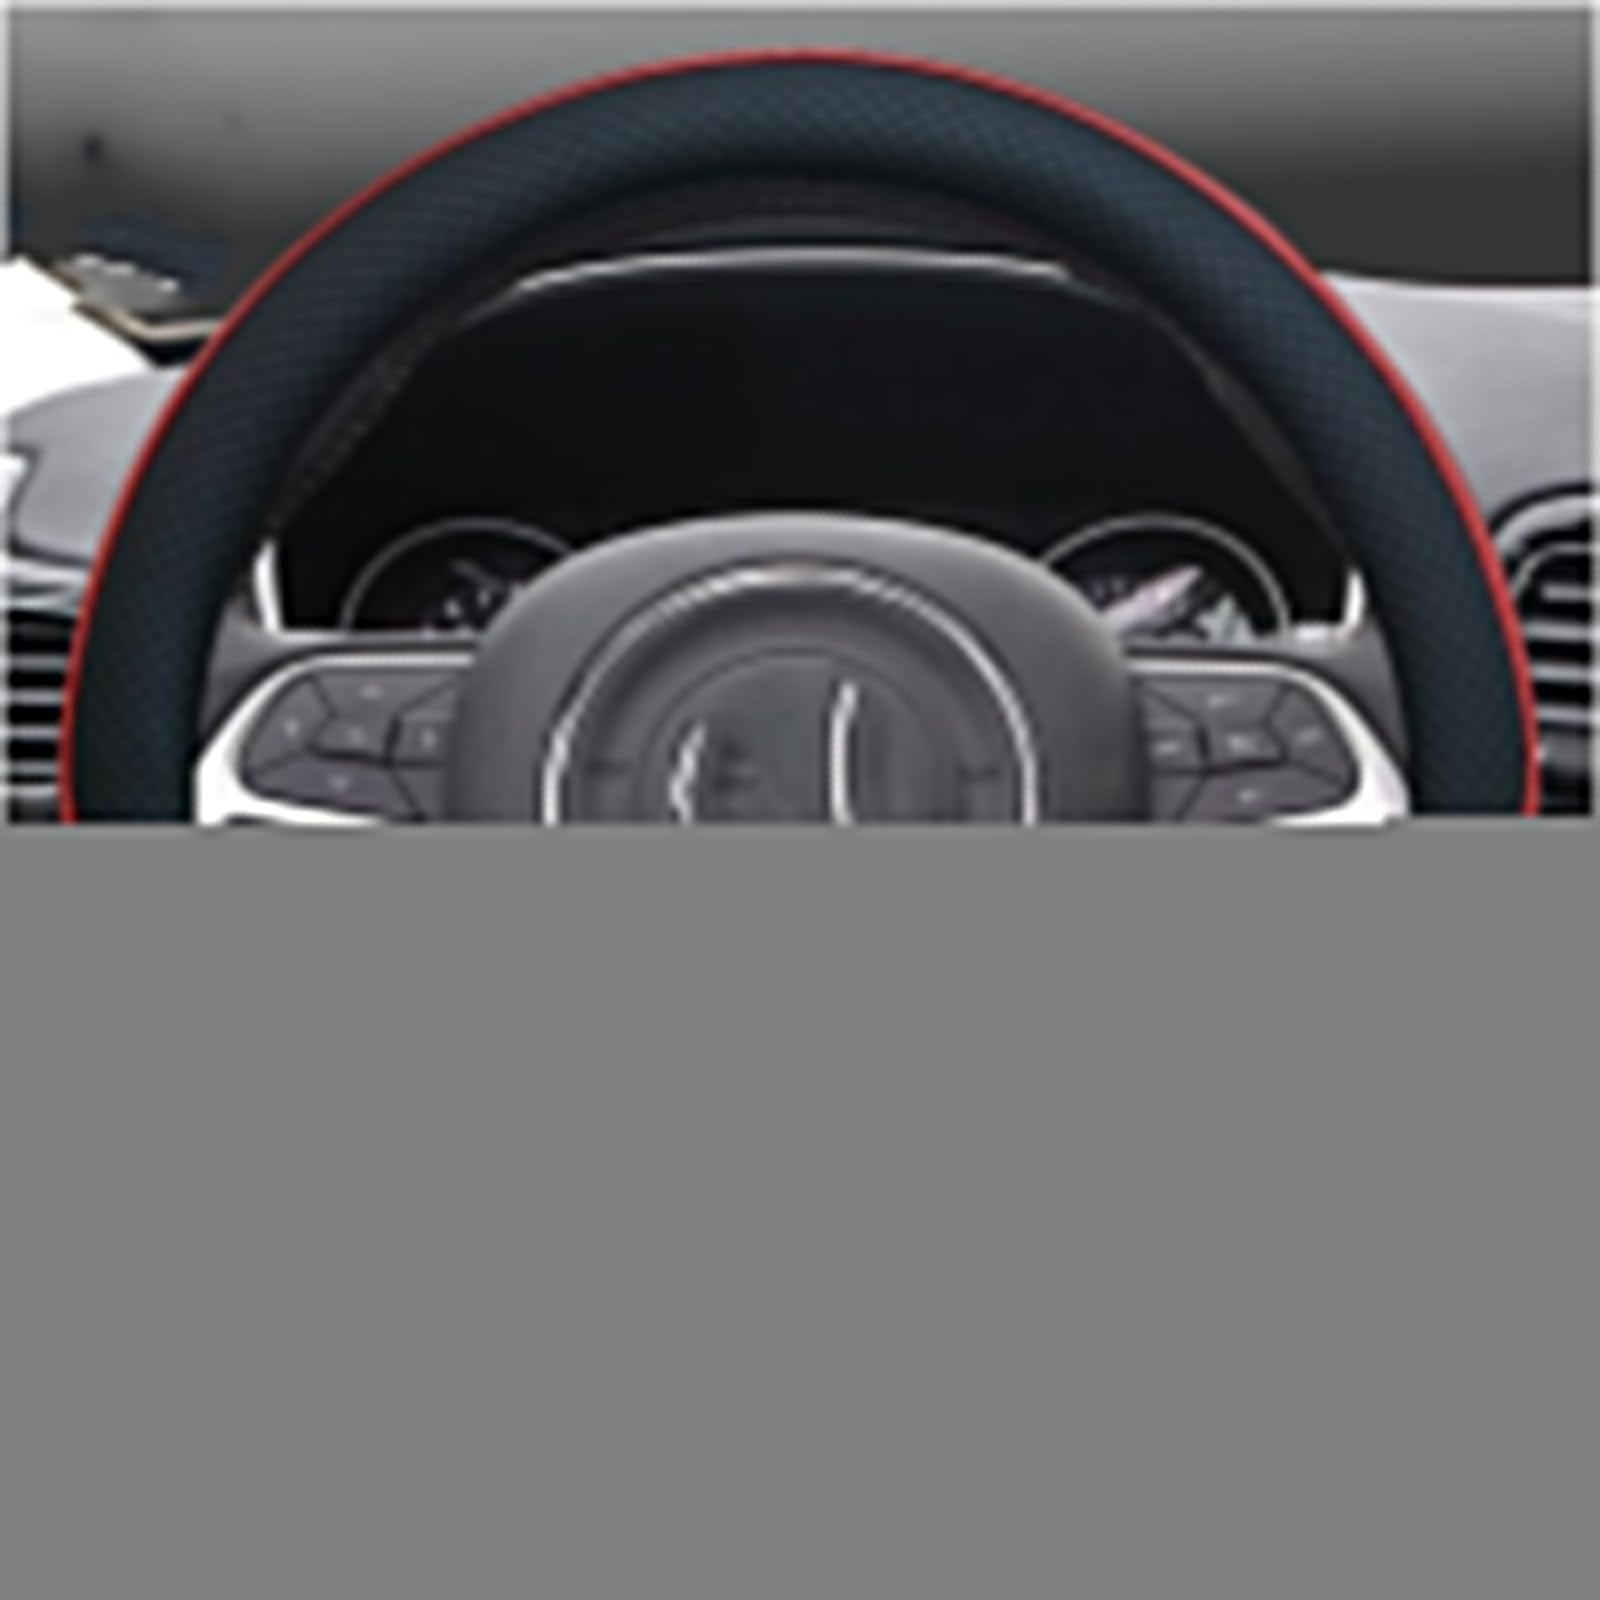 Auto Lenkradbezug für Citroen DS3 2009-2016, Durable Anti Rutsch Lenkrad Lenkradschutz, Lenkradschoner Accessoires Universal, 37-38cm, C/Black-red von CAIYUANWANG